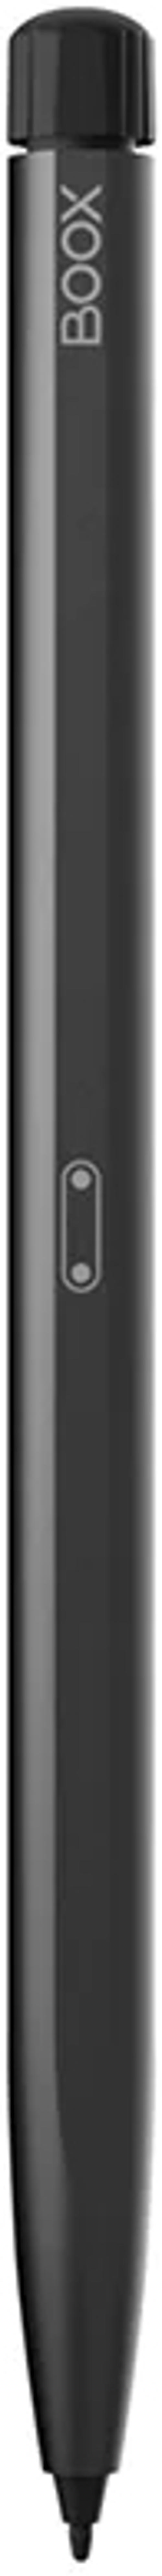 Onyx Boox Onyx Boox Pen 2 Pro – Black